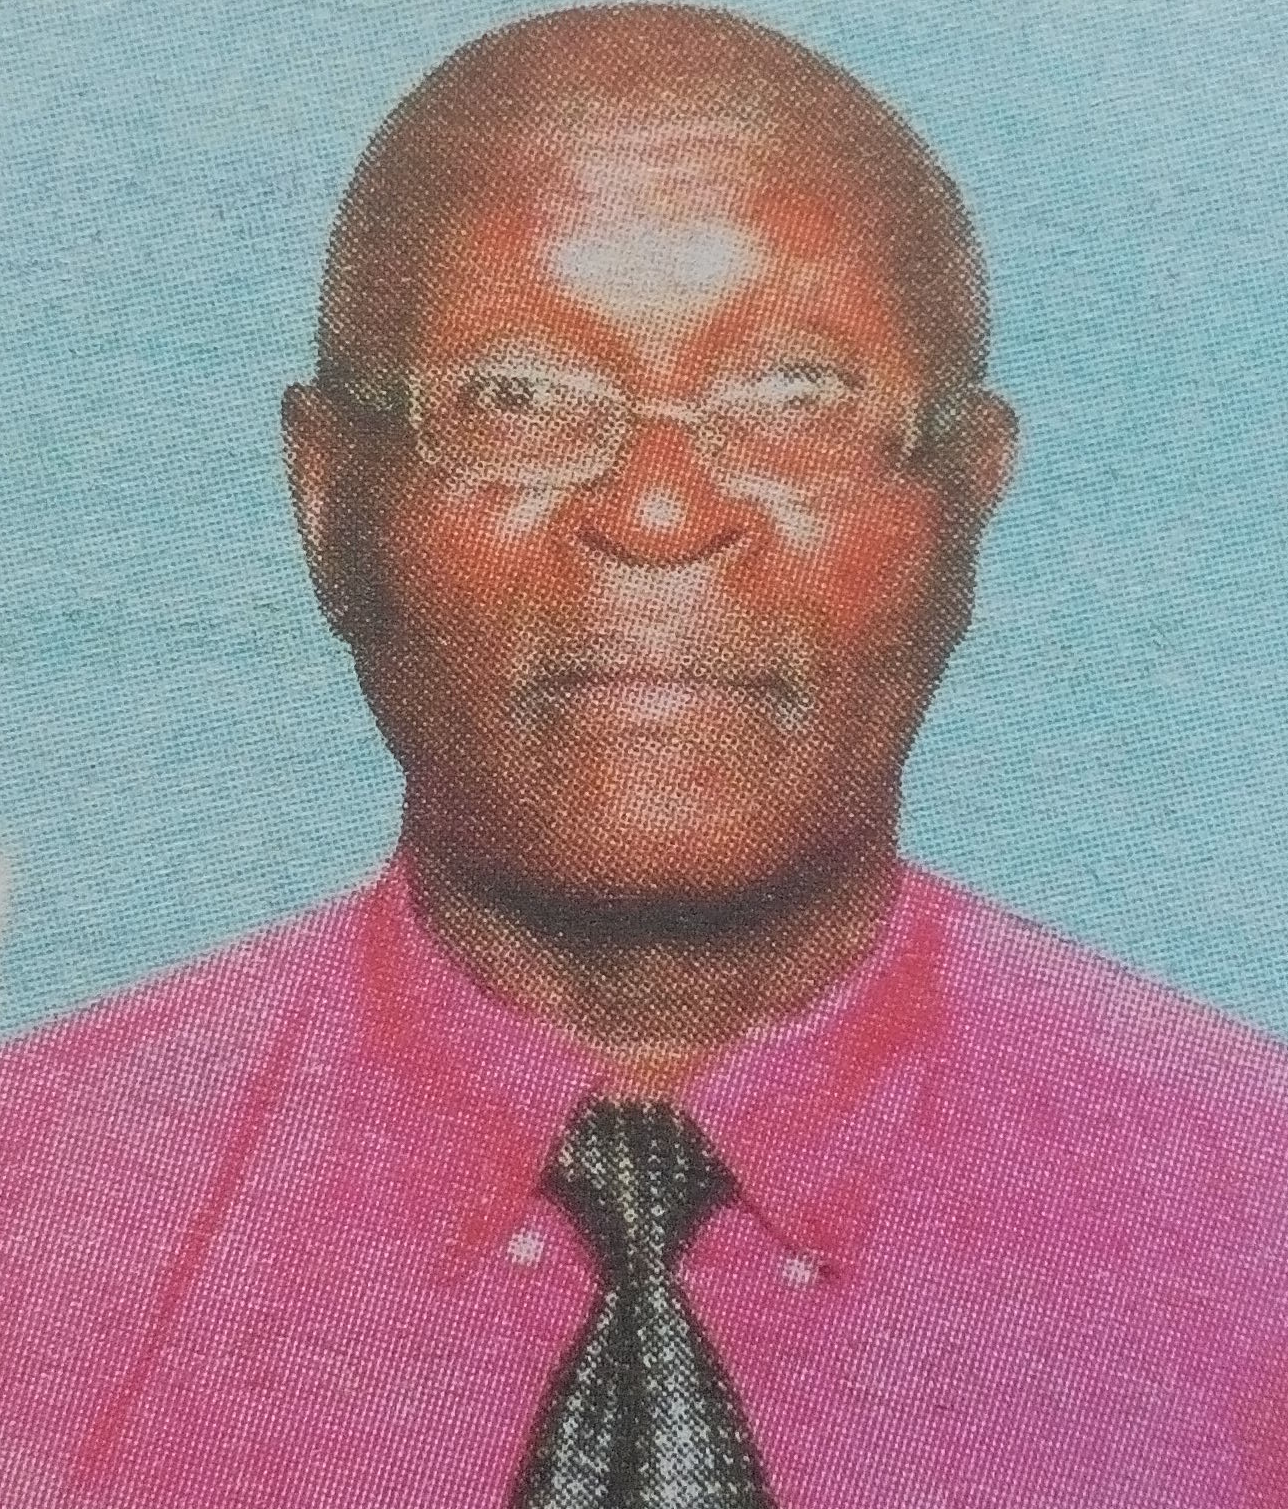 Obituary Image of Joseph Njuguna Gituru